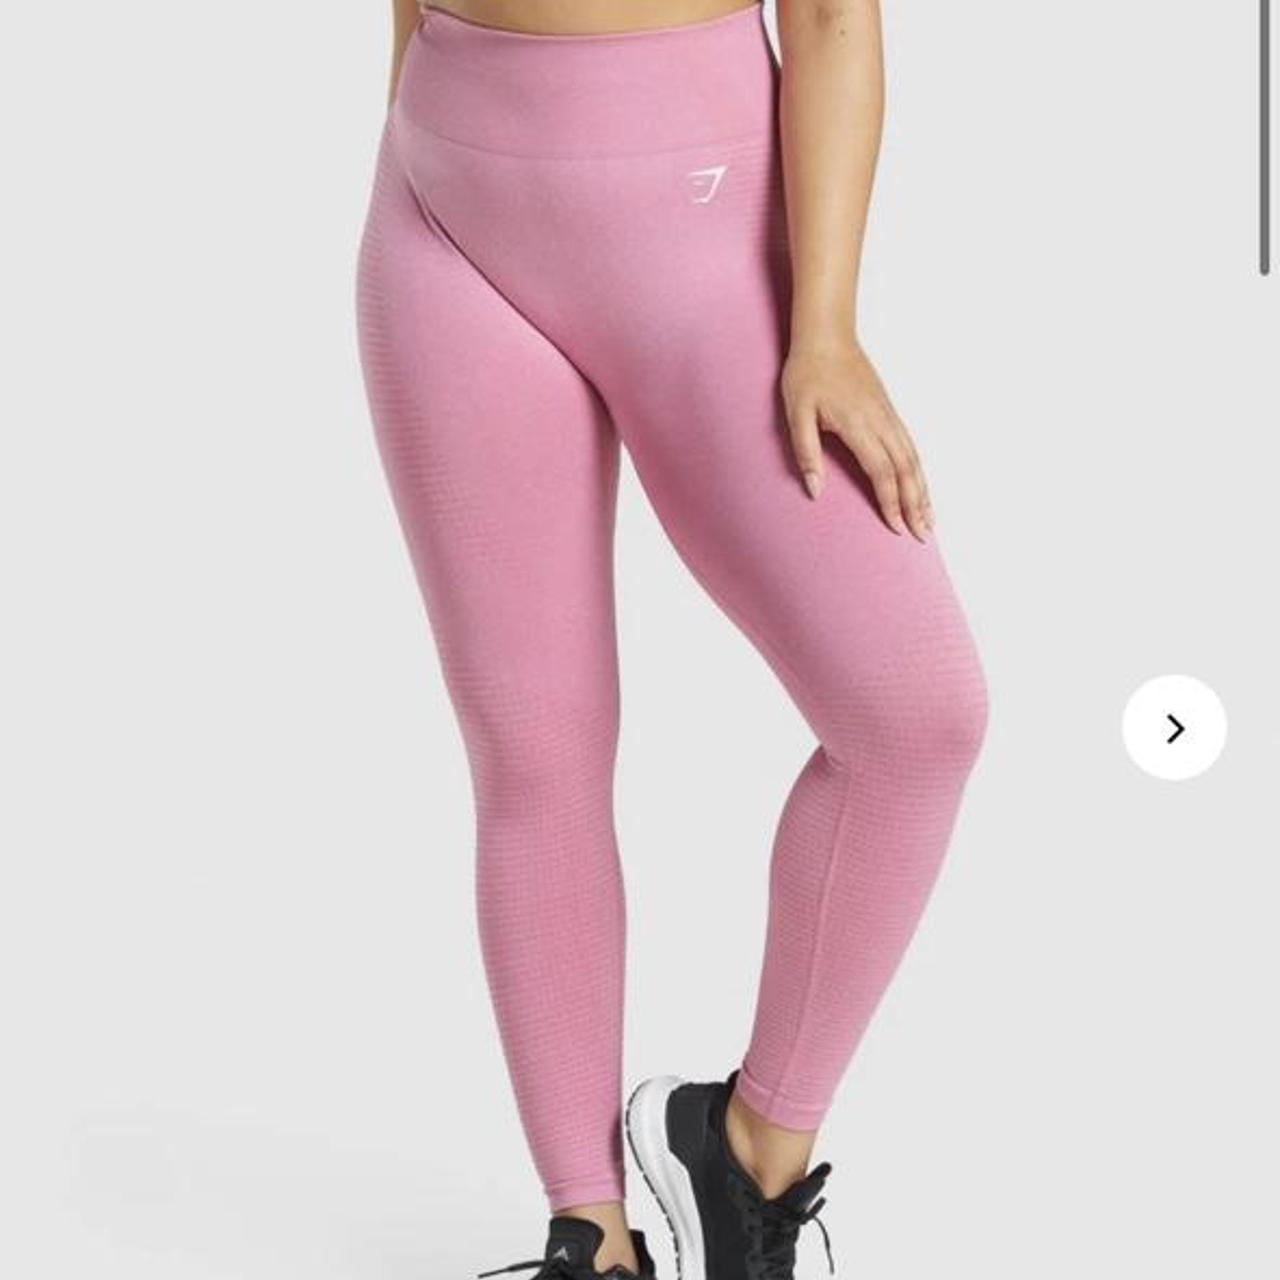 Gym shark seamless leggings in marl pink size XS. - Depop